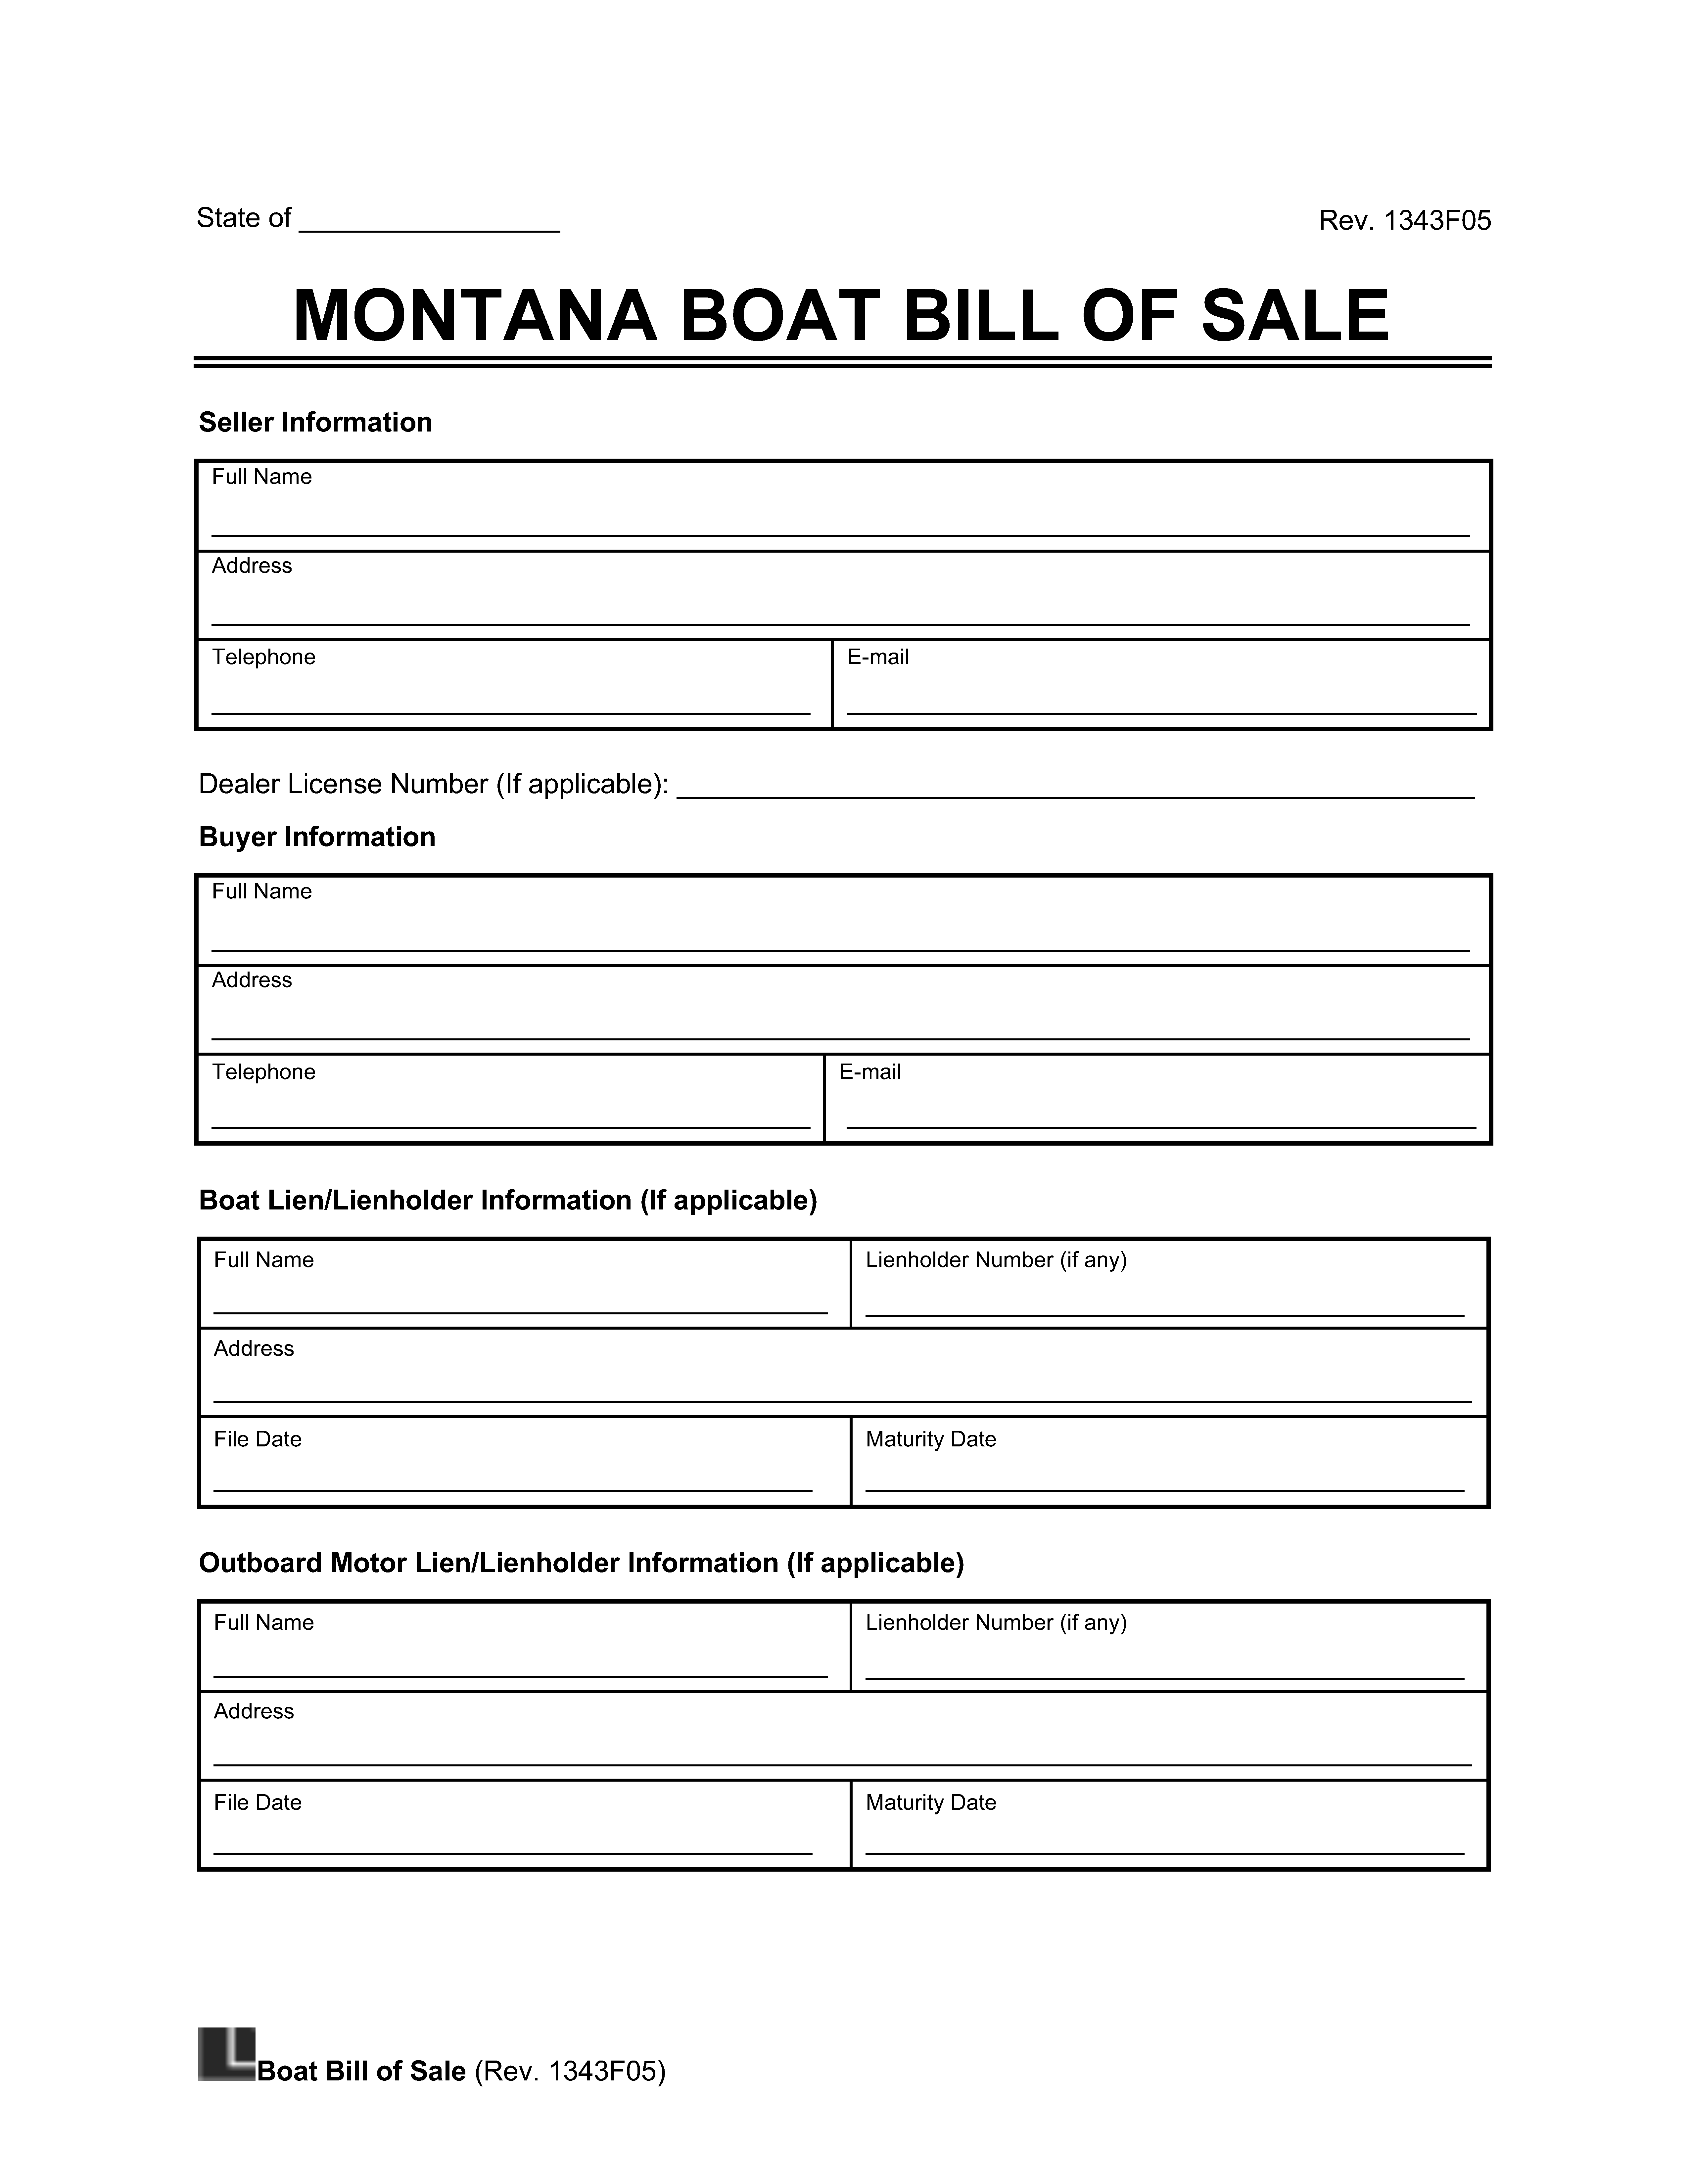 Boat Bill of Sale Montana screenshot